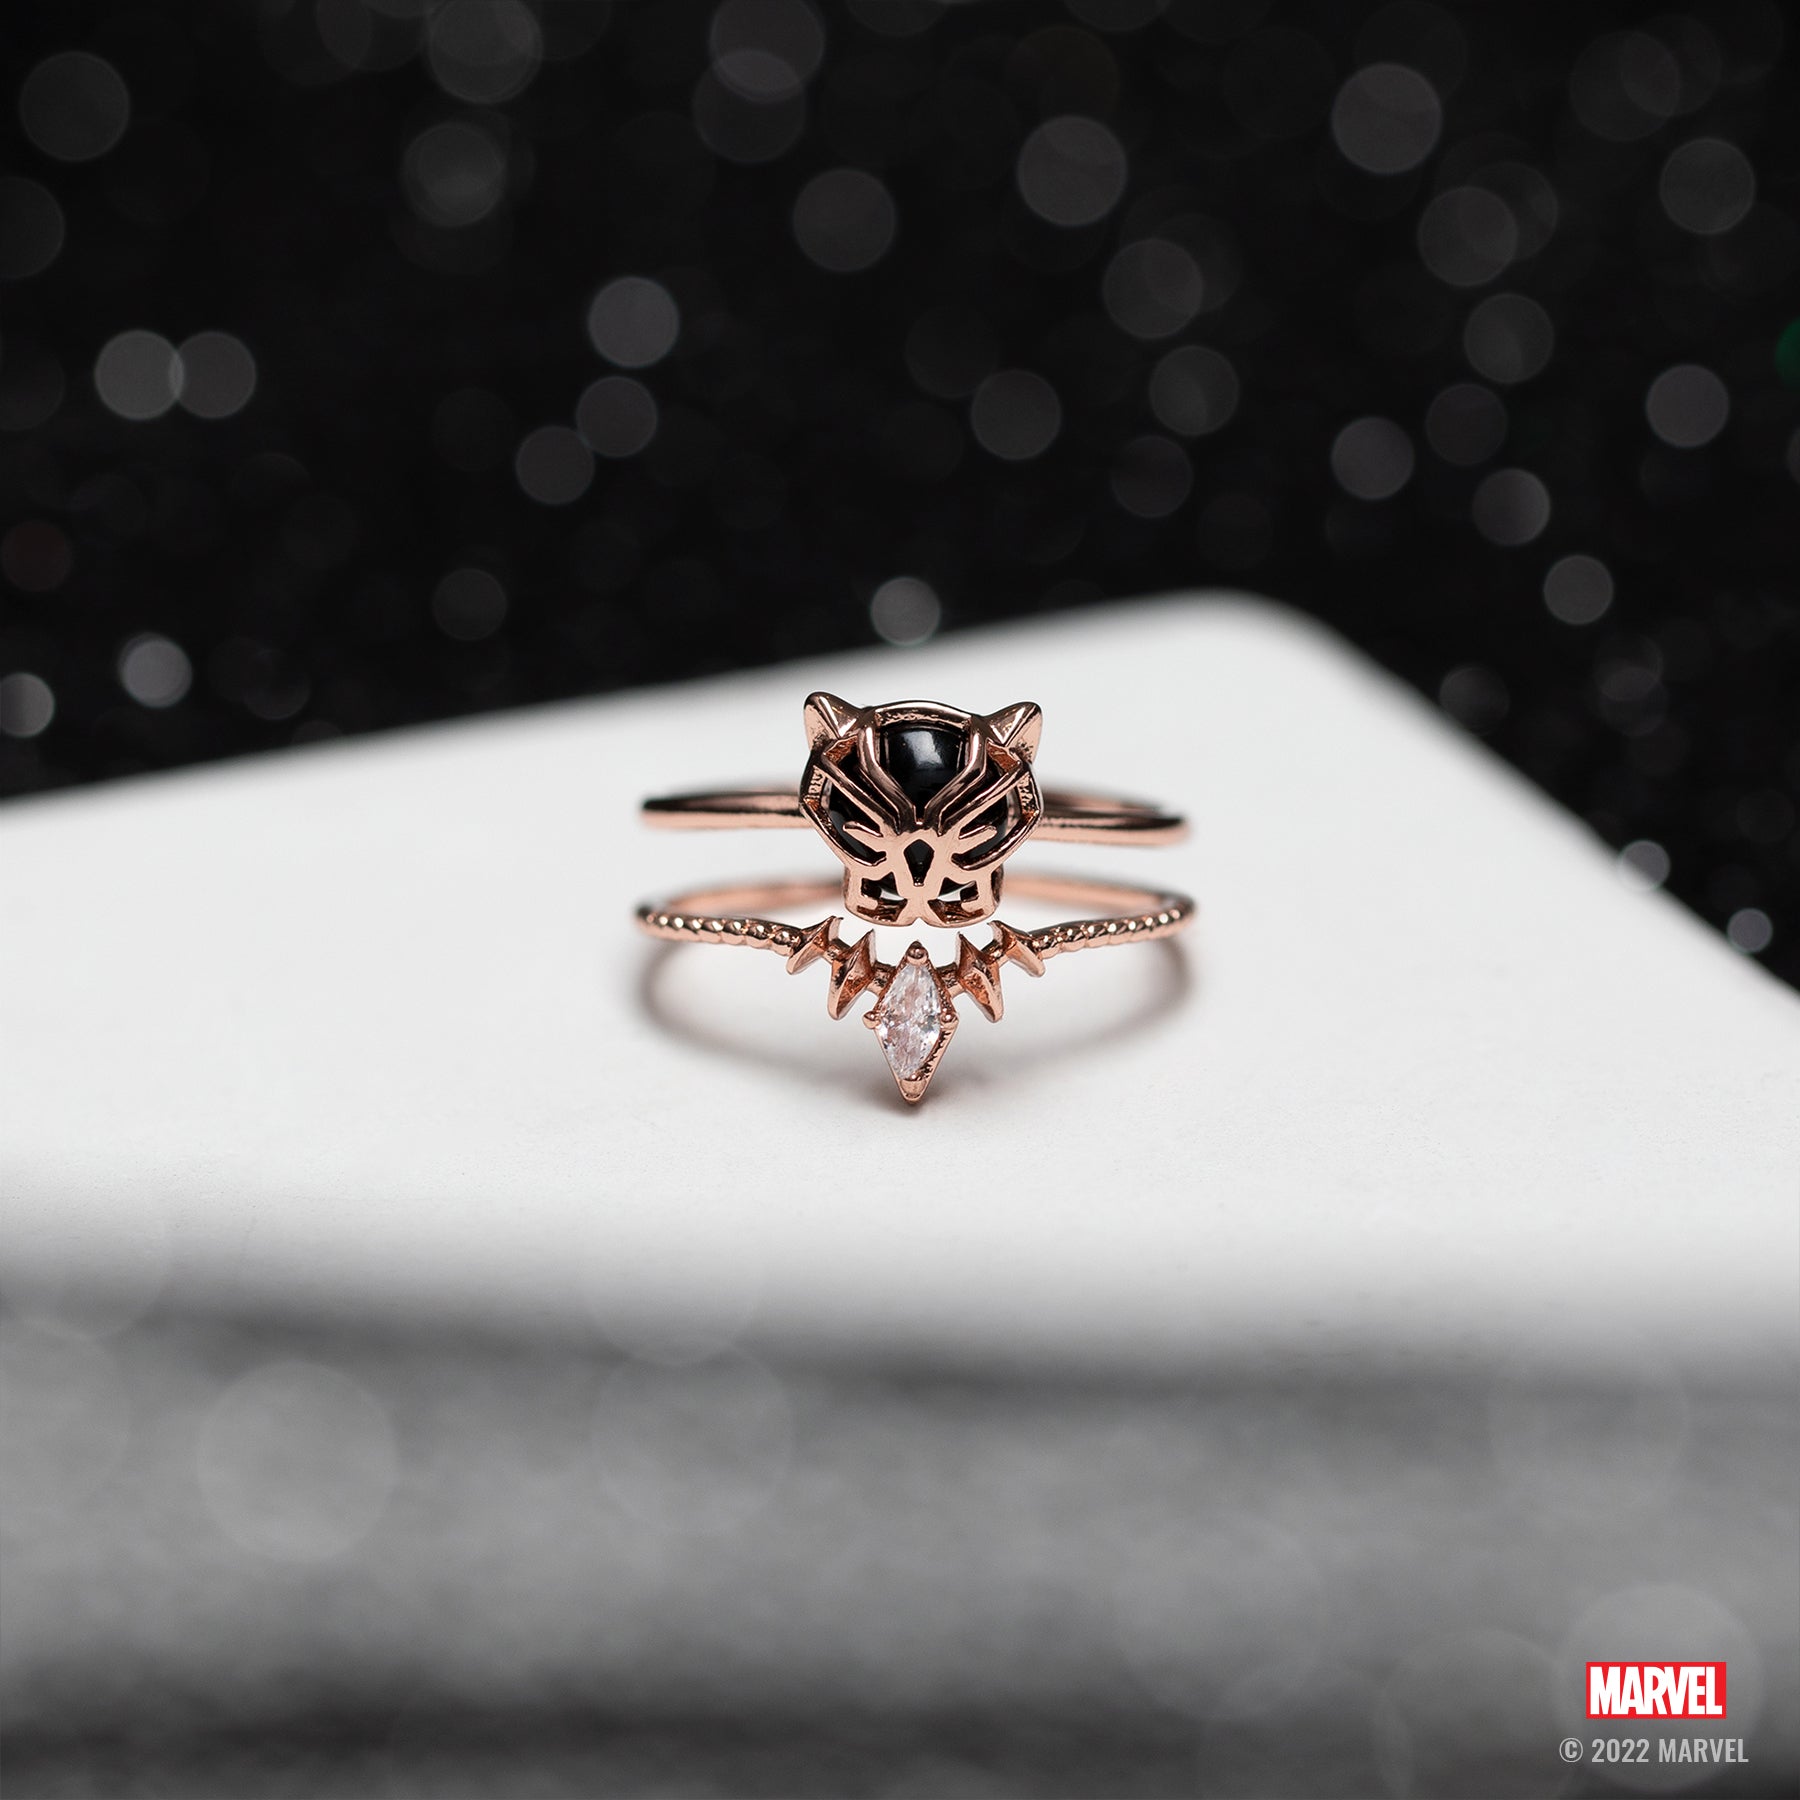 Marvel's Black Panther Ring